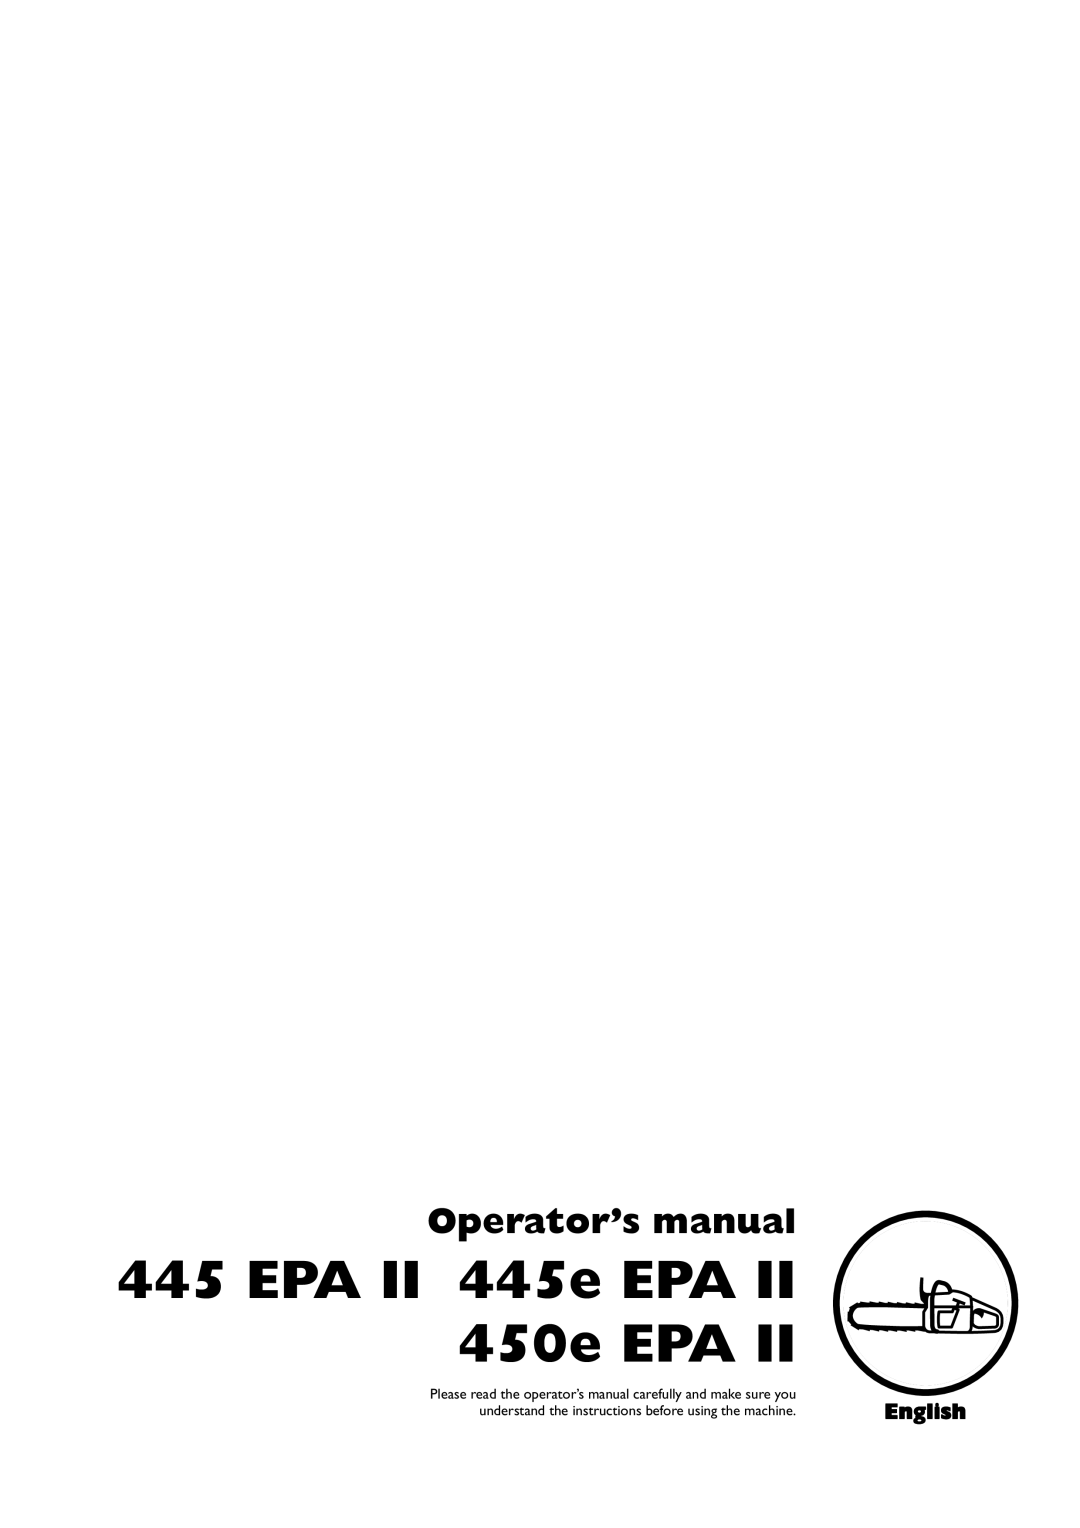 Husqvarna 445 EPA II, 445e EPA II, 450e EPA II manual English, EPA II 445e EPA 450e EPA, Operator’s manual 